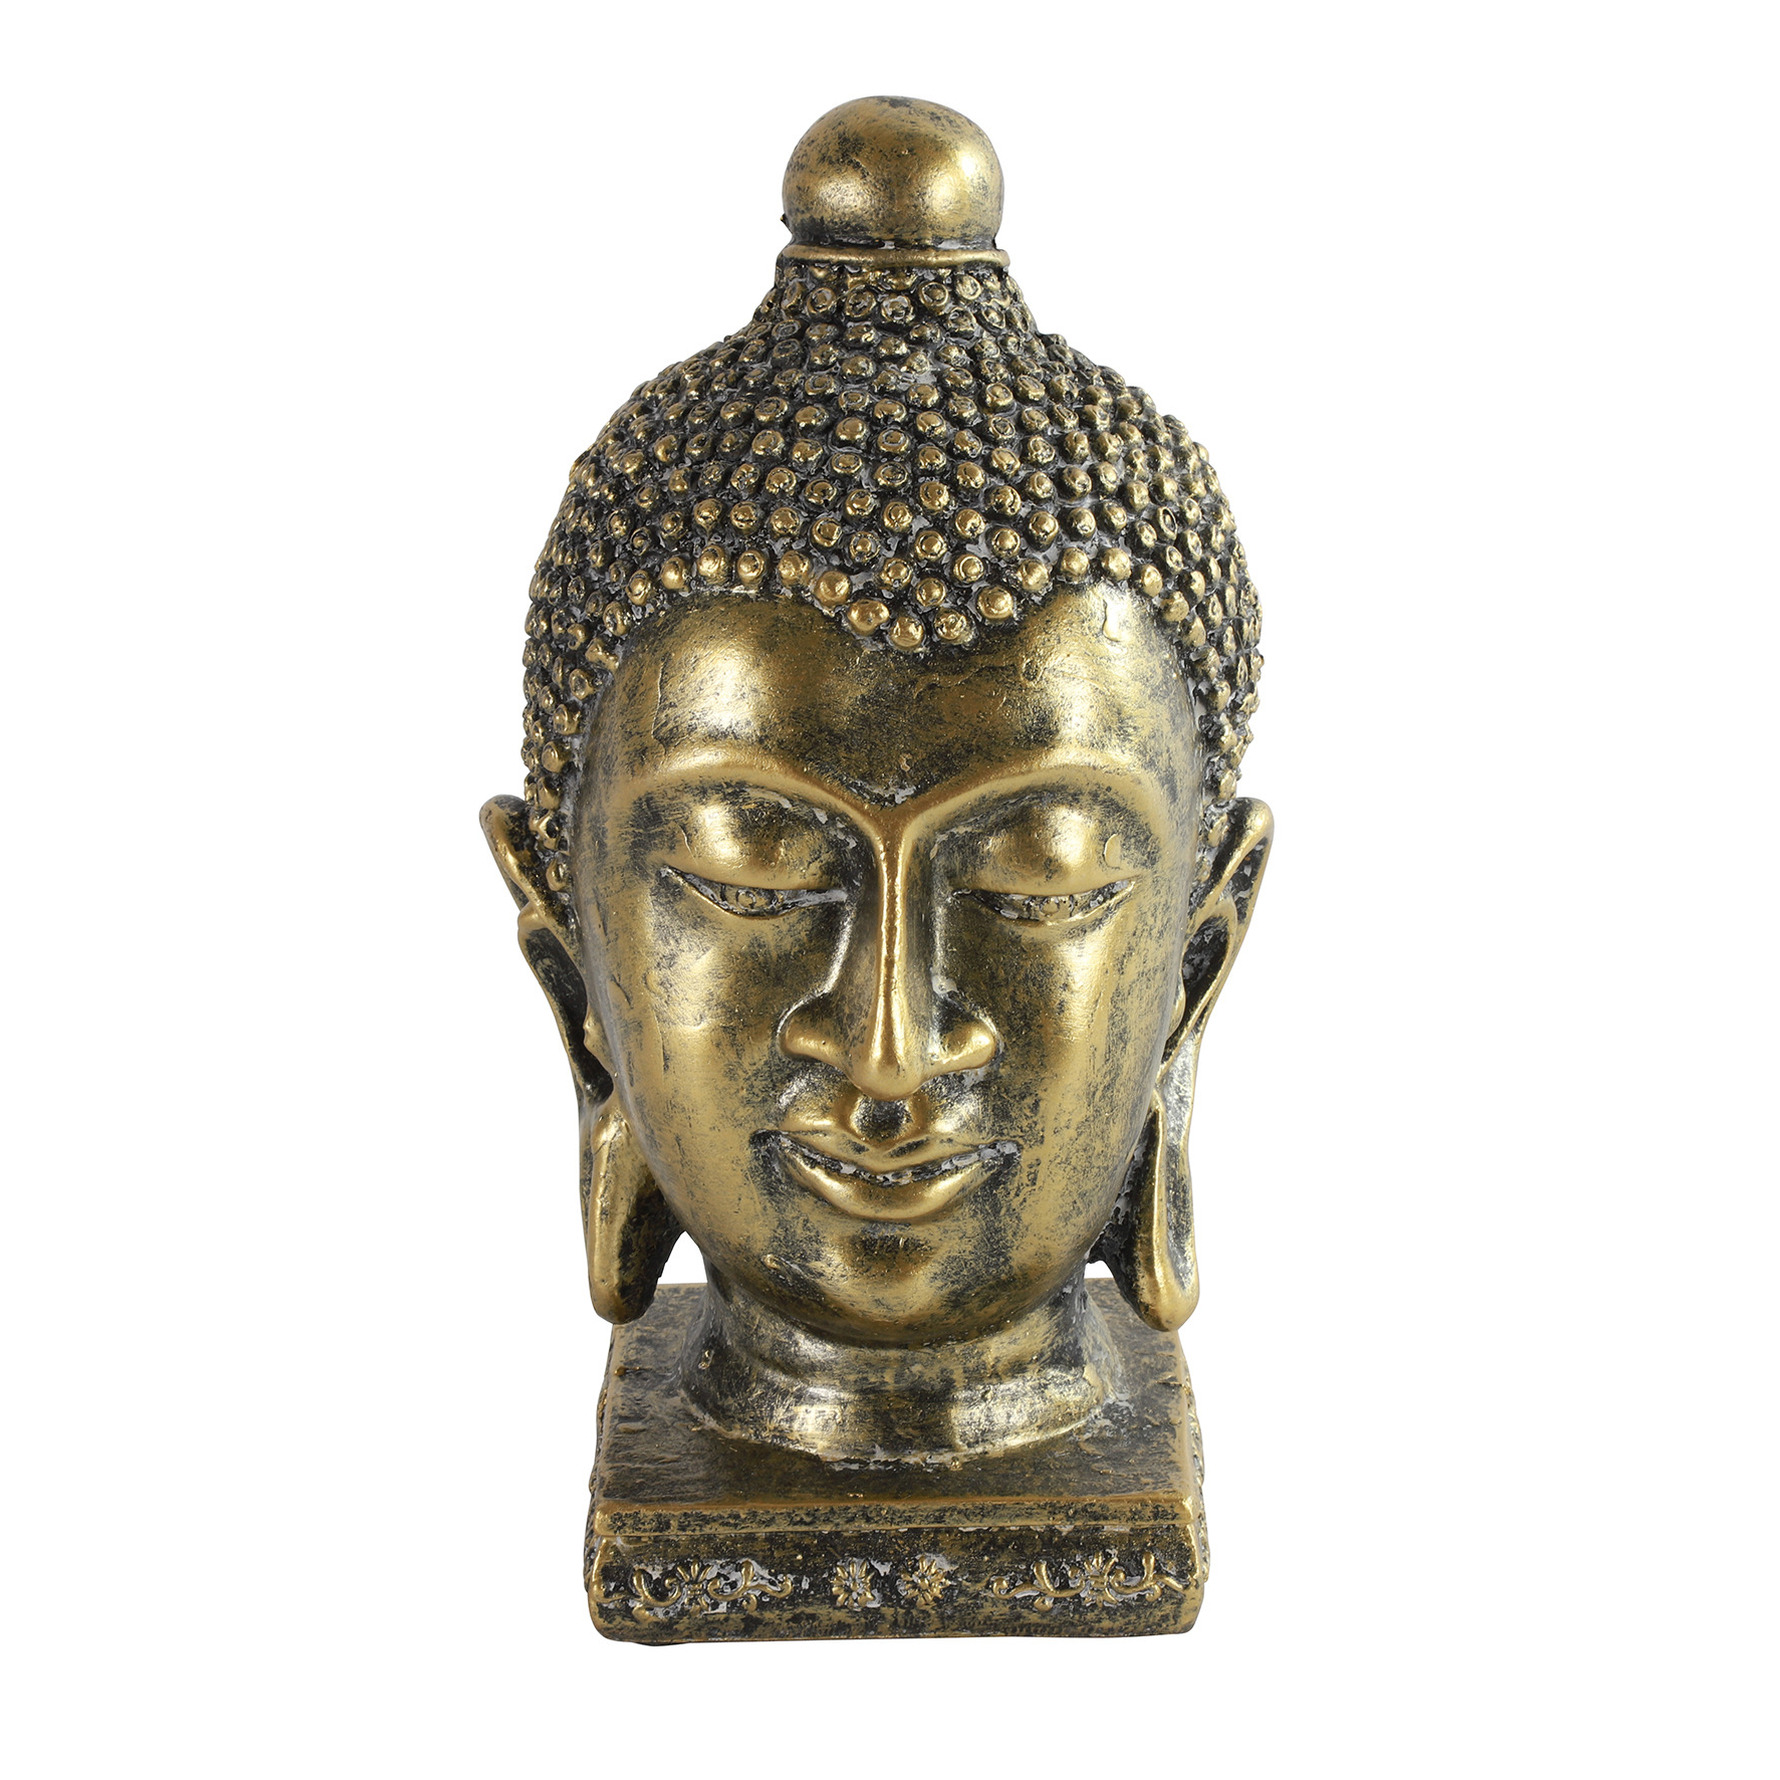 Countryfield Home deco Boeddha hoofd beeld - goud kleurig - 13 x 23.5 cm - voor binnen -